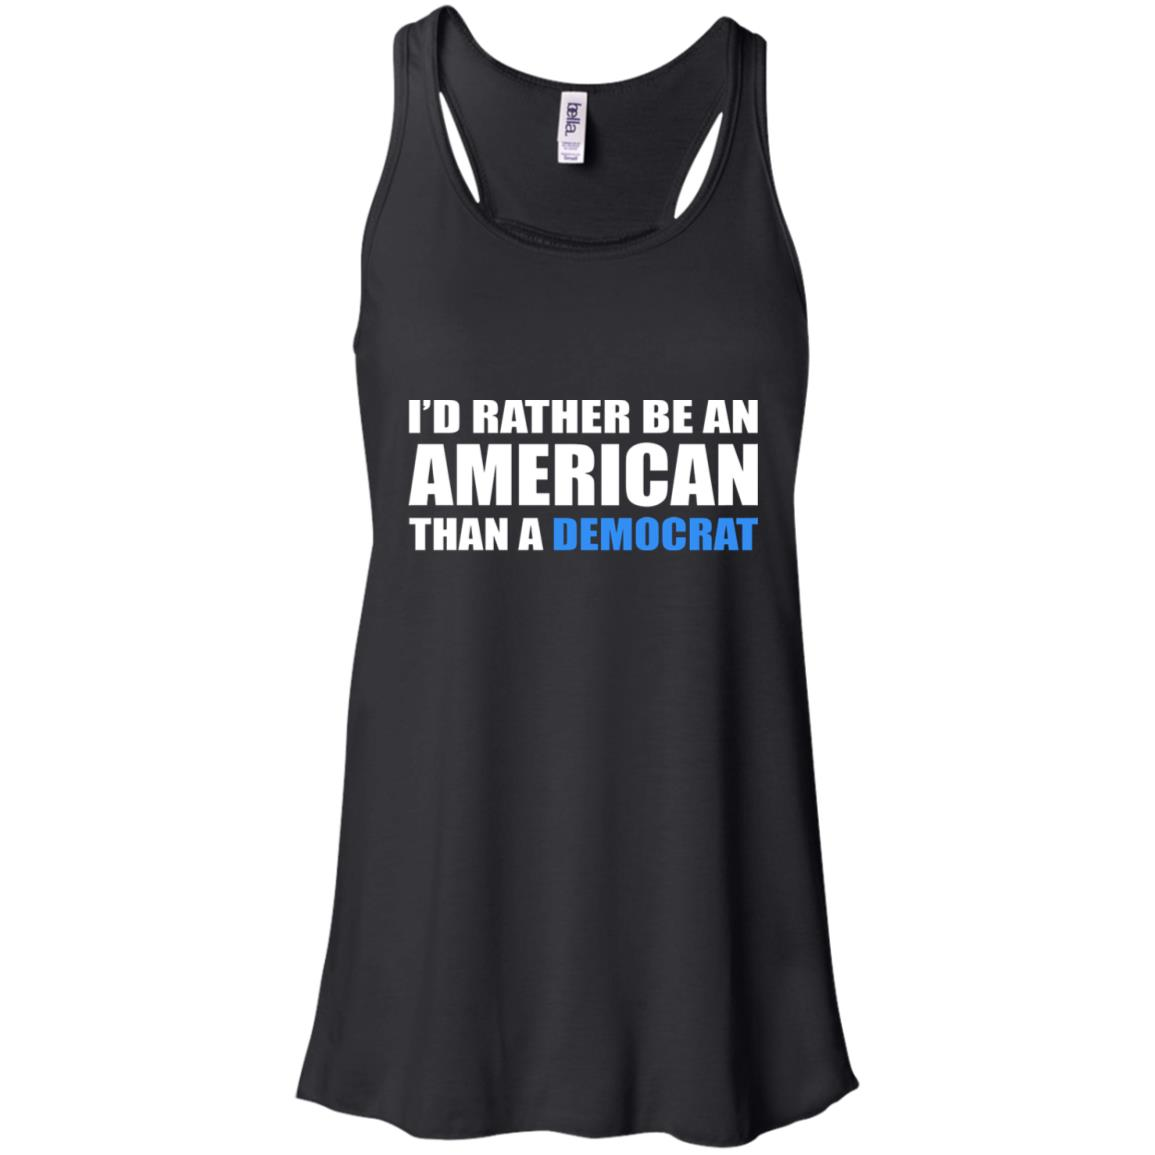 I’d Rather Be An American Than A Democrat shirt